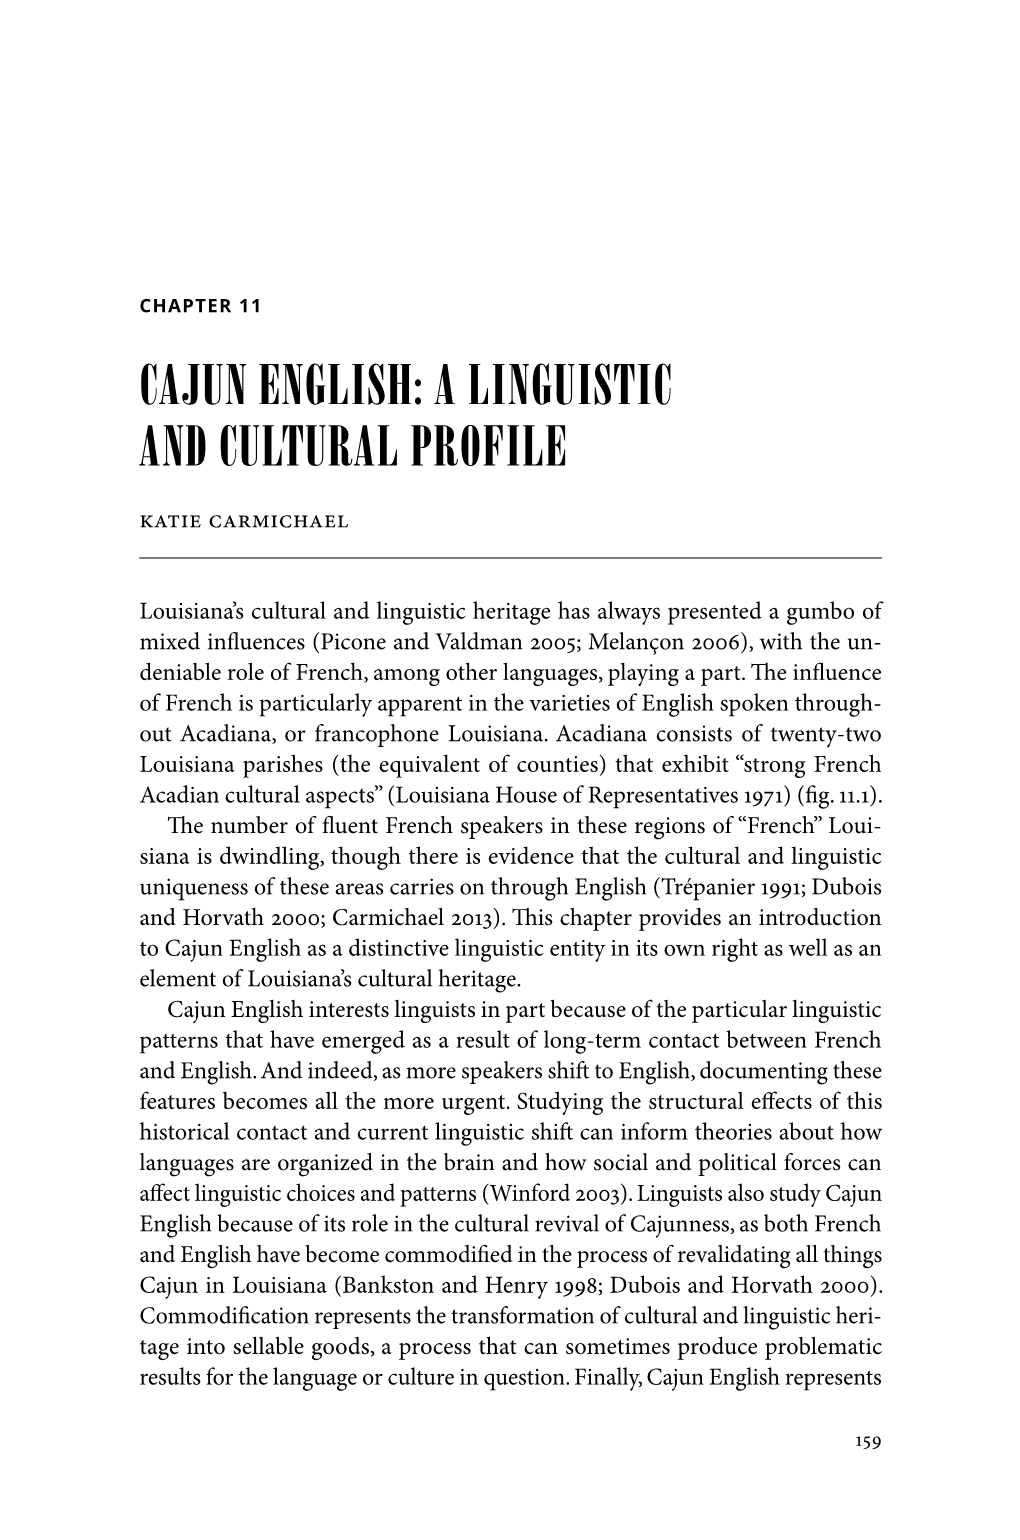 Cajun English: a Linguistic and Cultural Profile 161